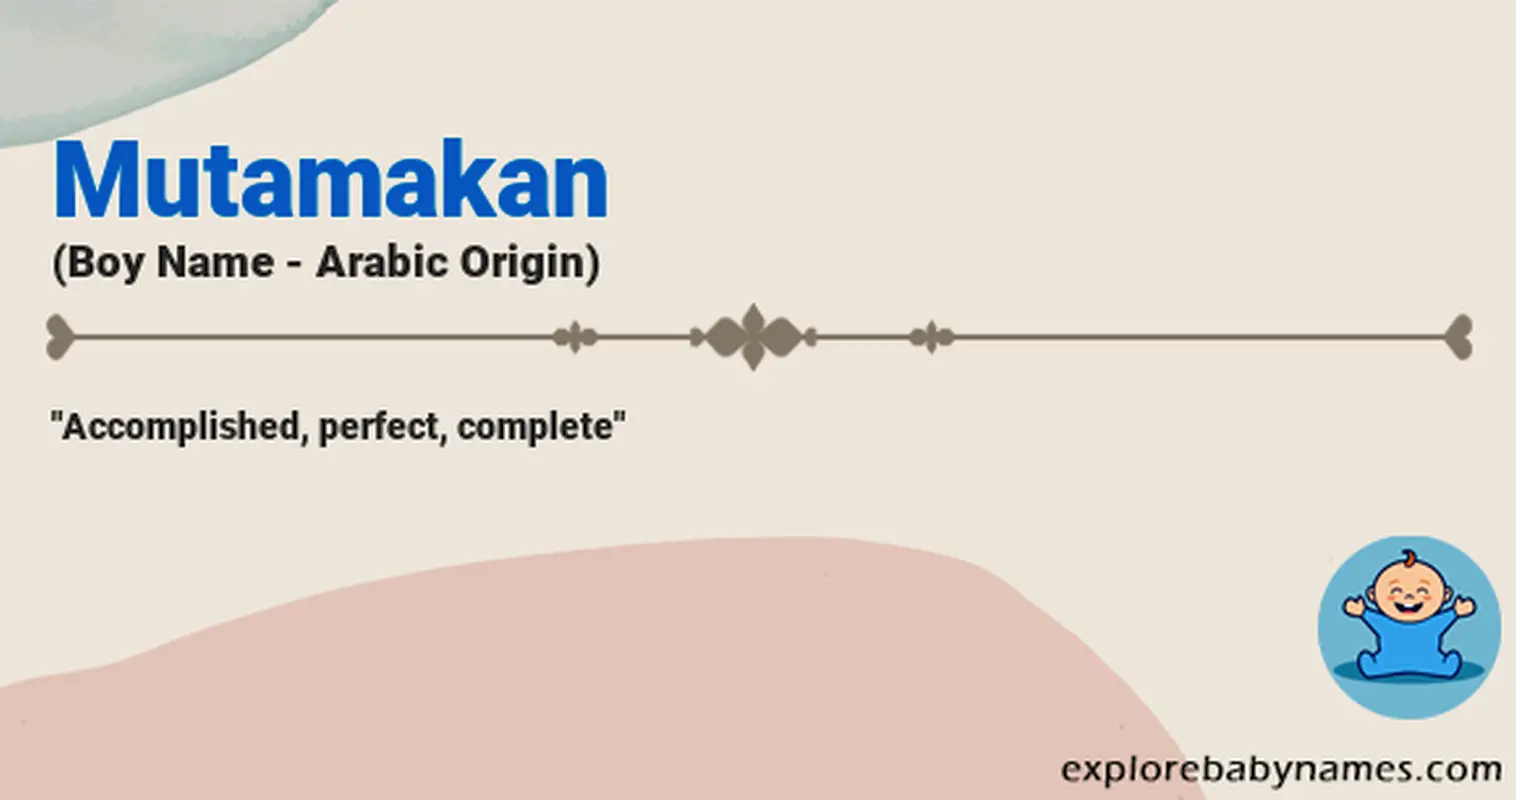 Meaning of Mutamakan